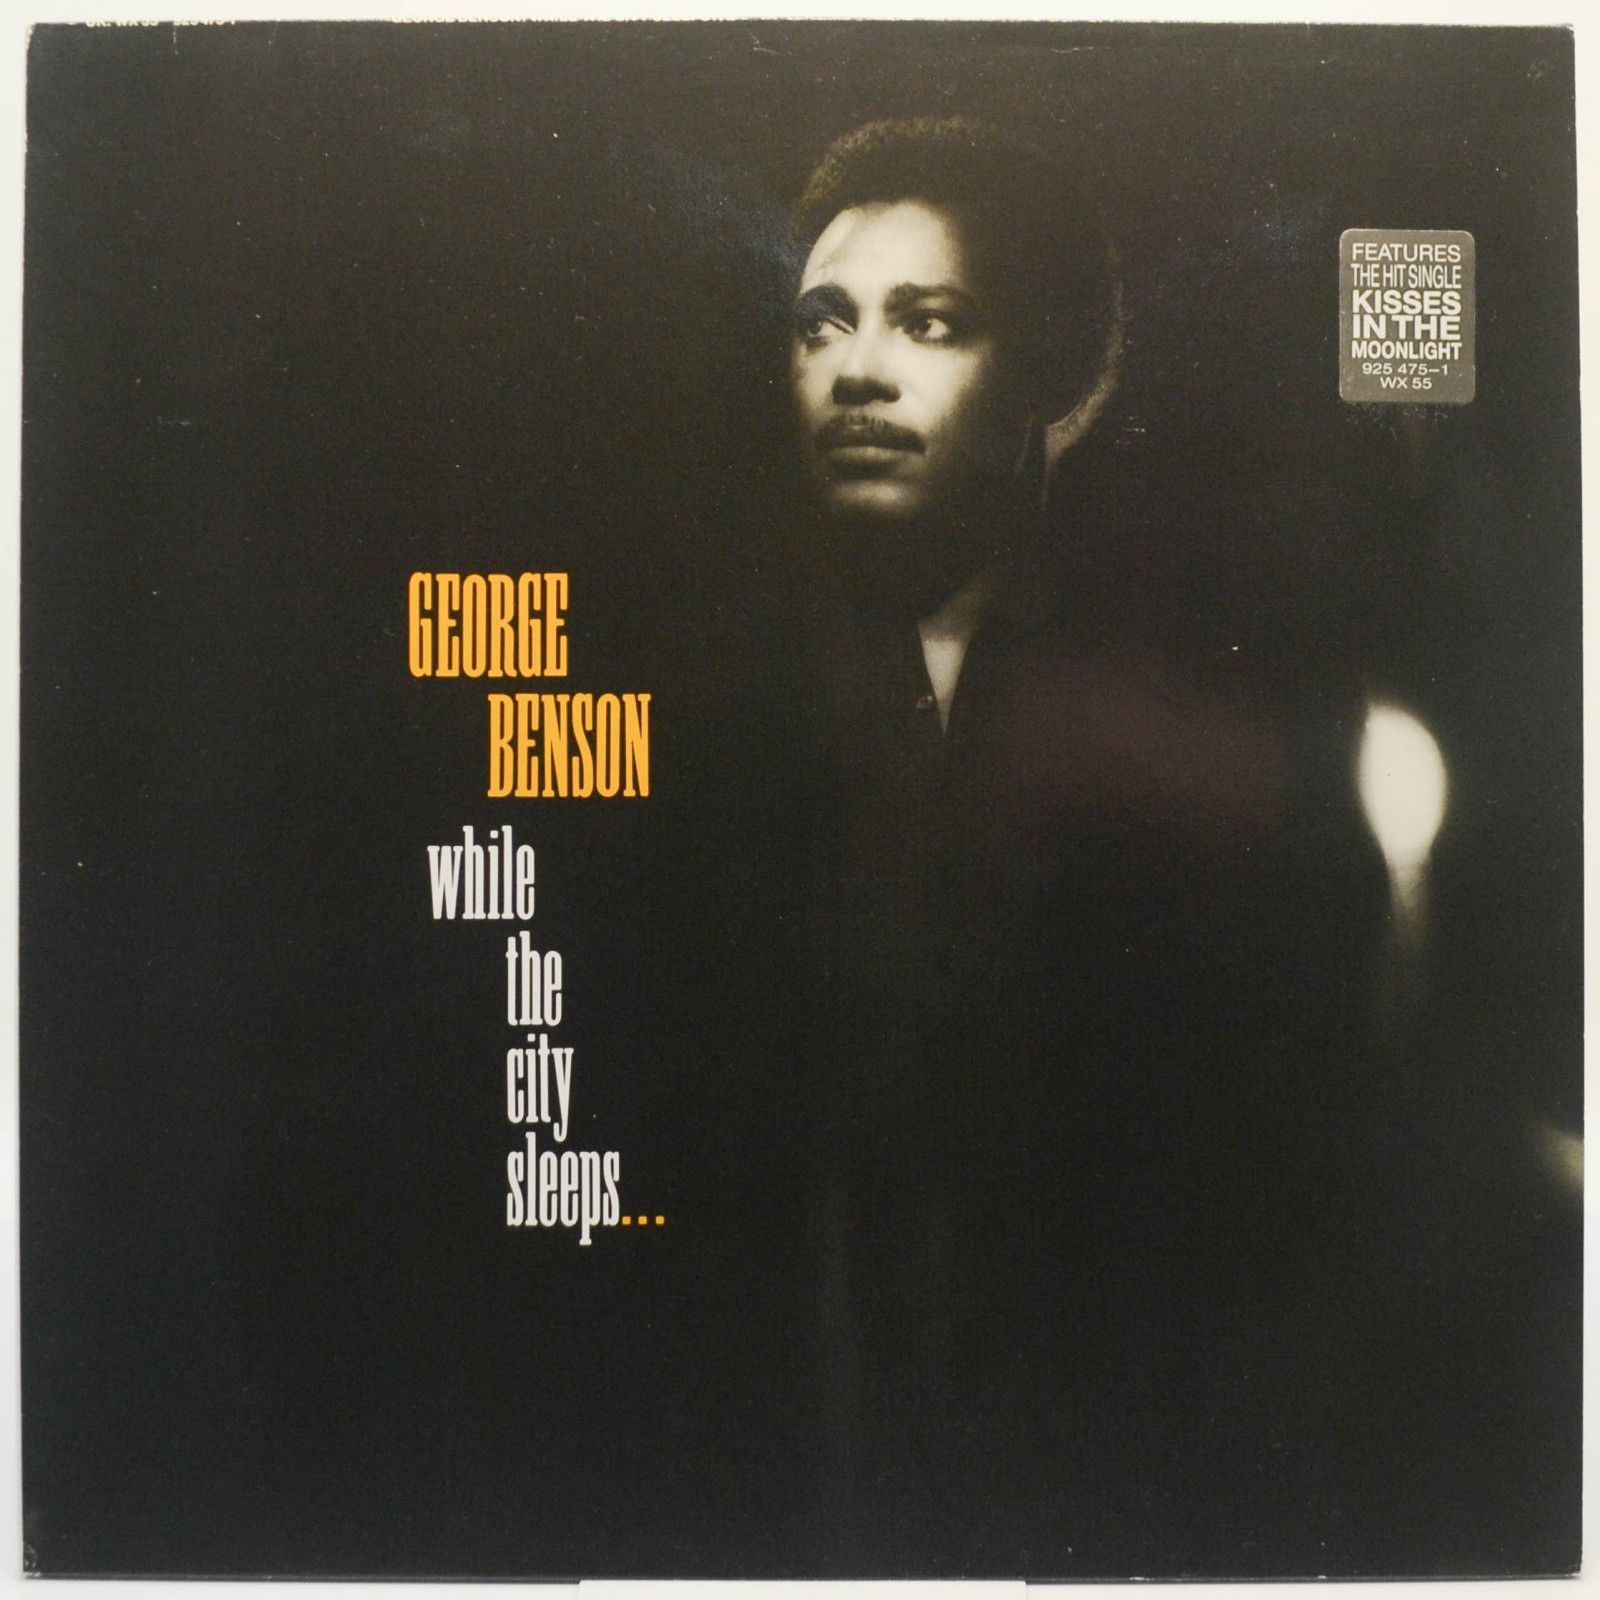 George Benson — While The City Sleeps..., 1986